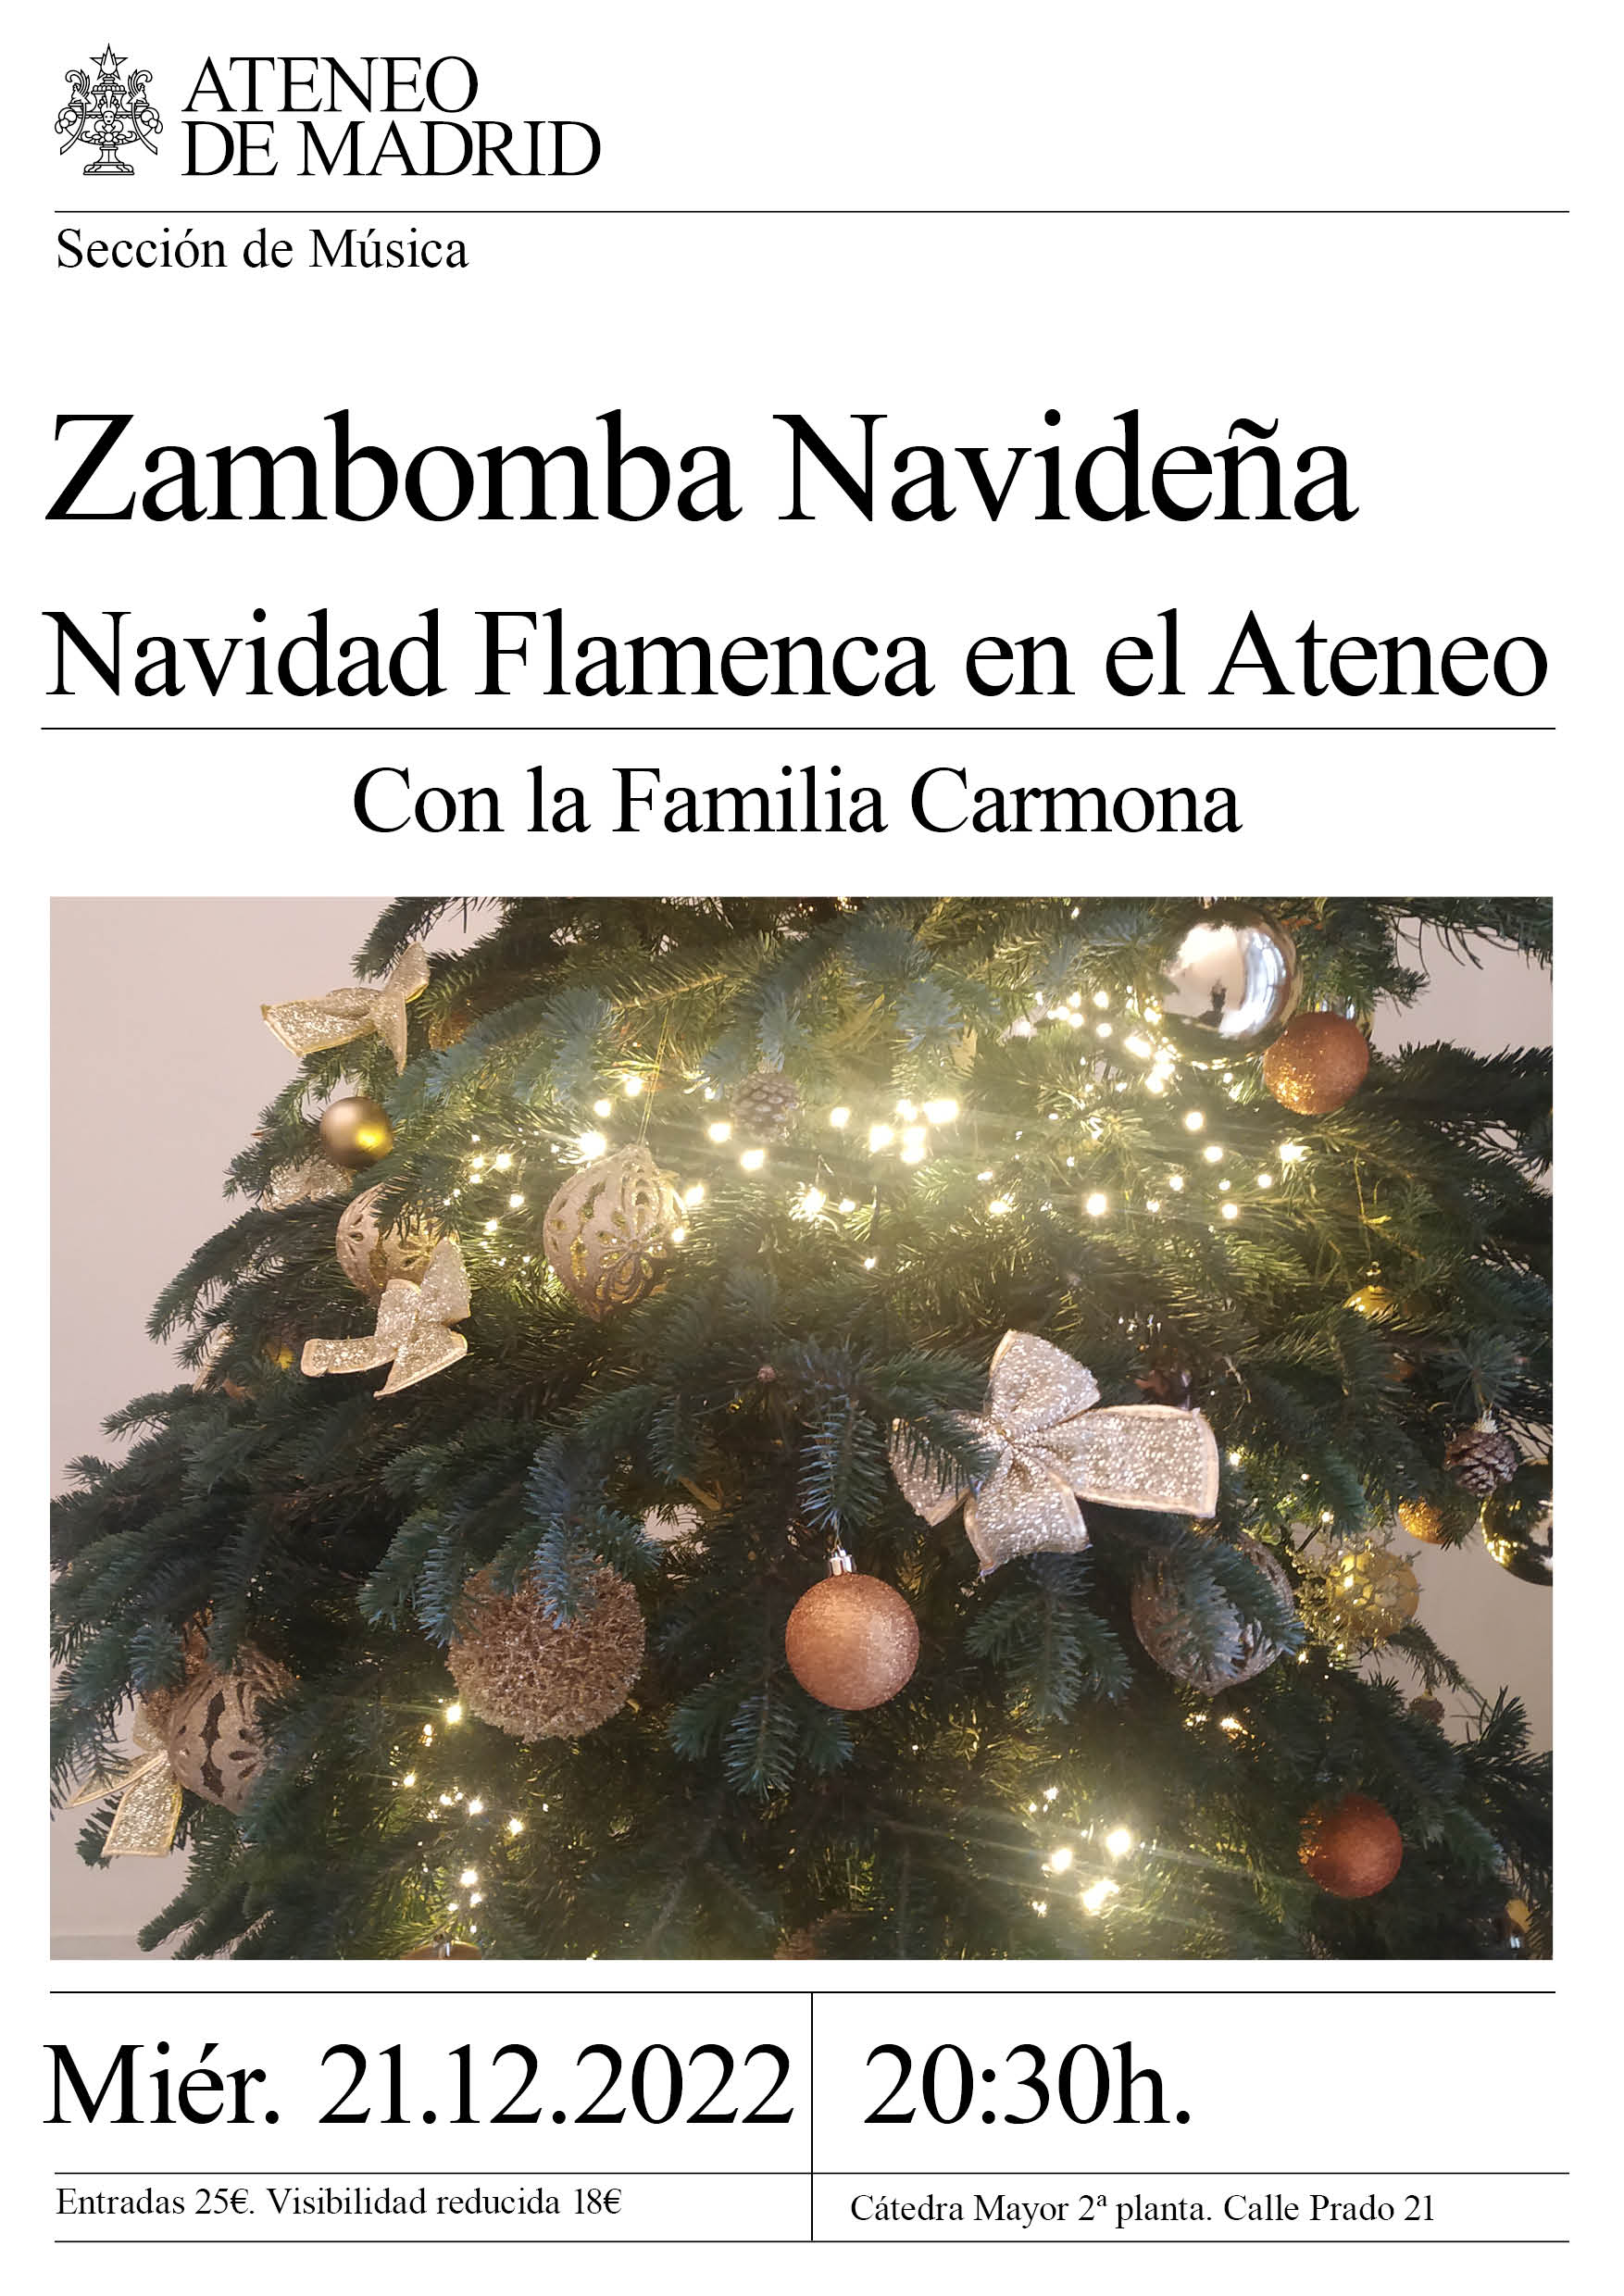 ZAMBOMBA NAVIDEÑA con Familia CARMONA en Ateneo de Madrid - Mutick